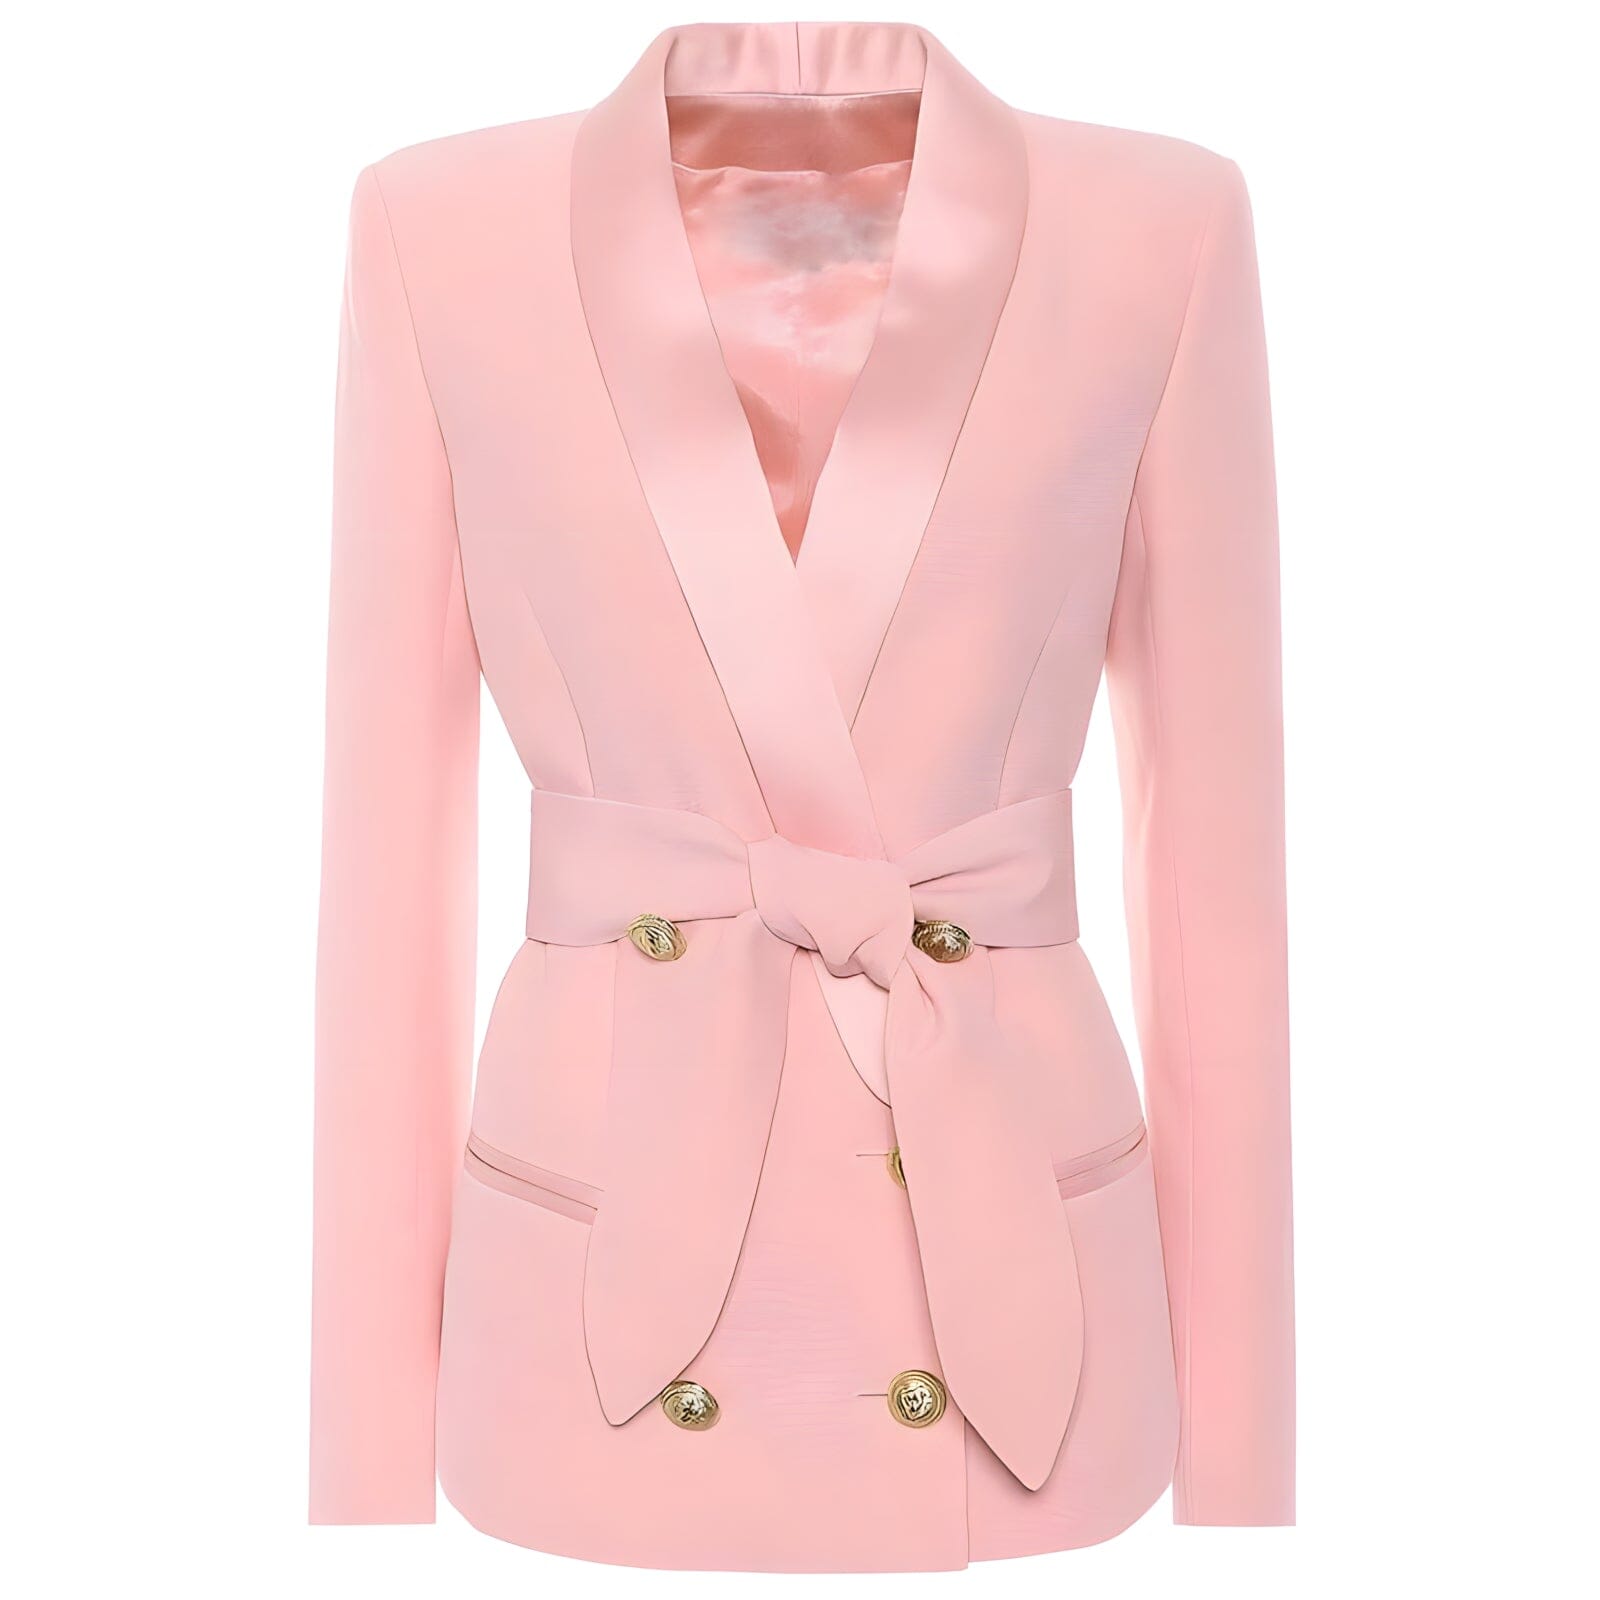 The Julia Belted Slim Fit Blazer - Multiple Colors Shop5798684 Store Pink S 